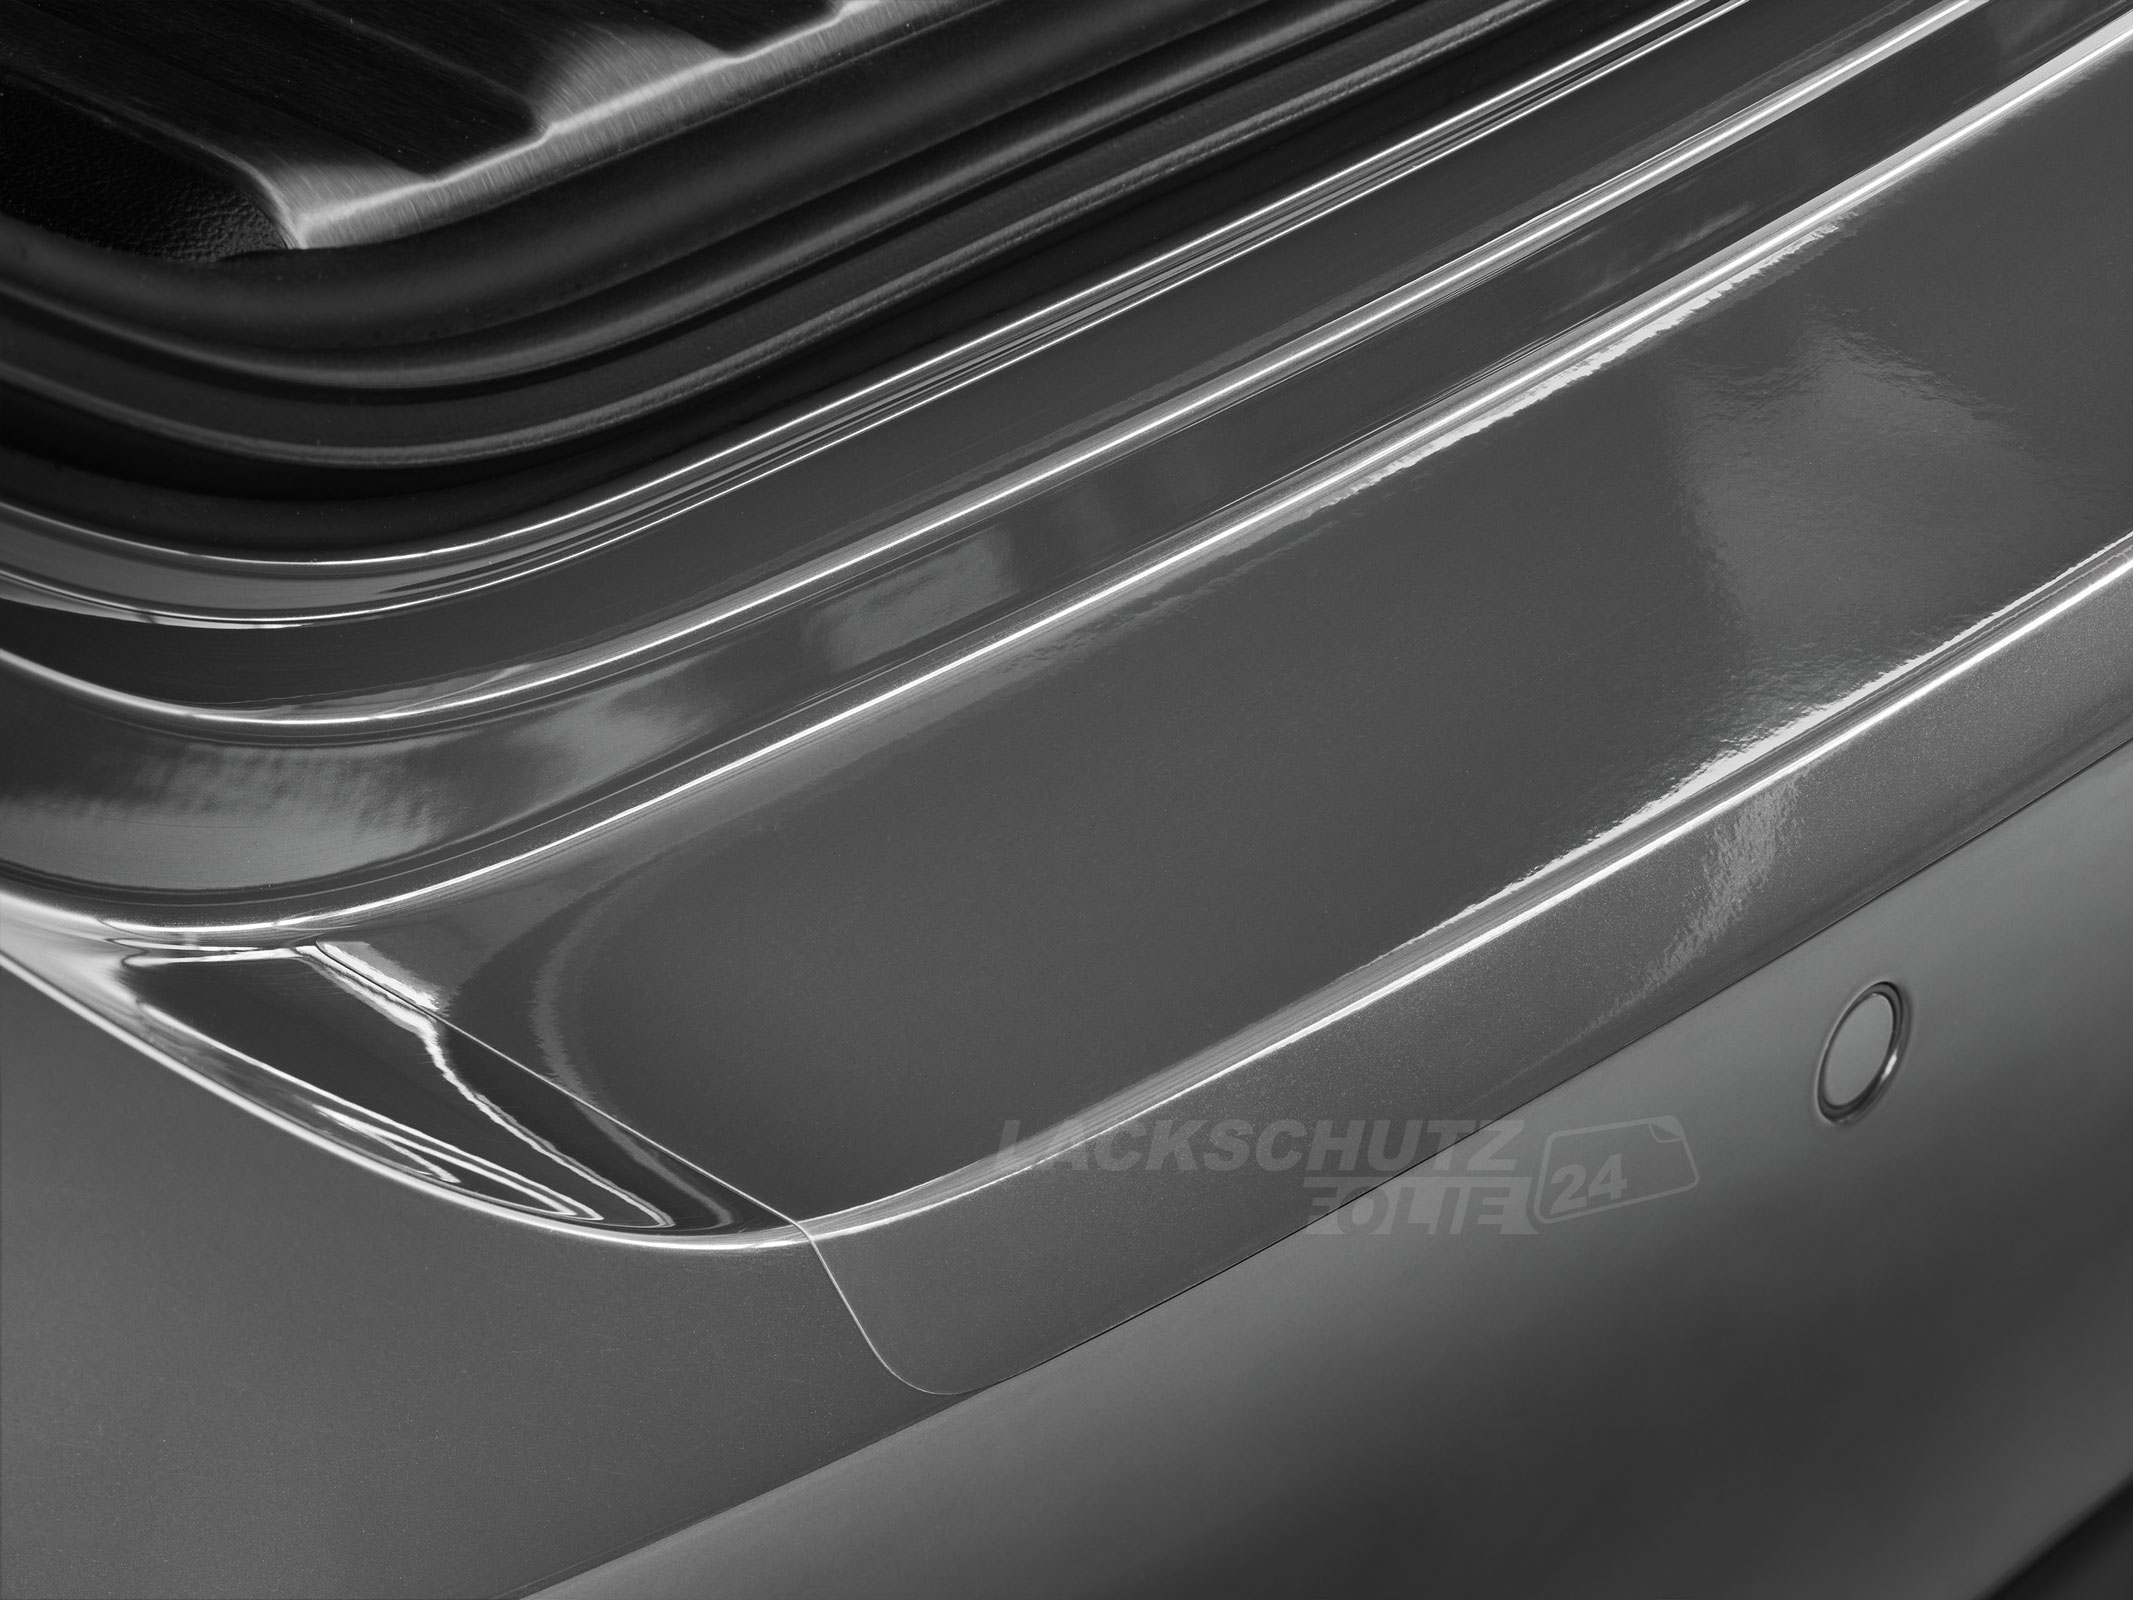 Ladekantenschutzfolie - Transparent Glatt Hochglänzend 150 µm stark für Skoda Fabia Kombi (II) Typ 5J, Facelift, BJ 2010-06/2014